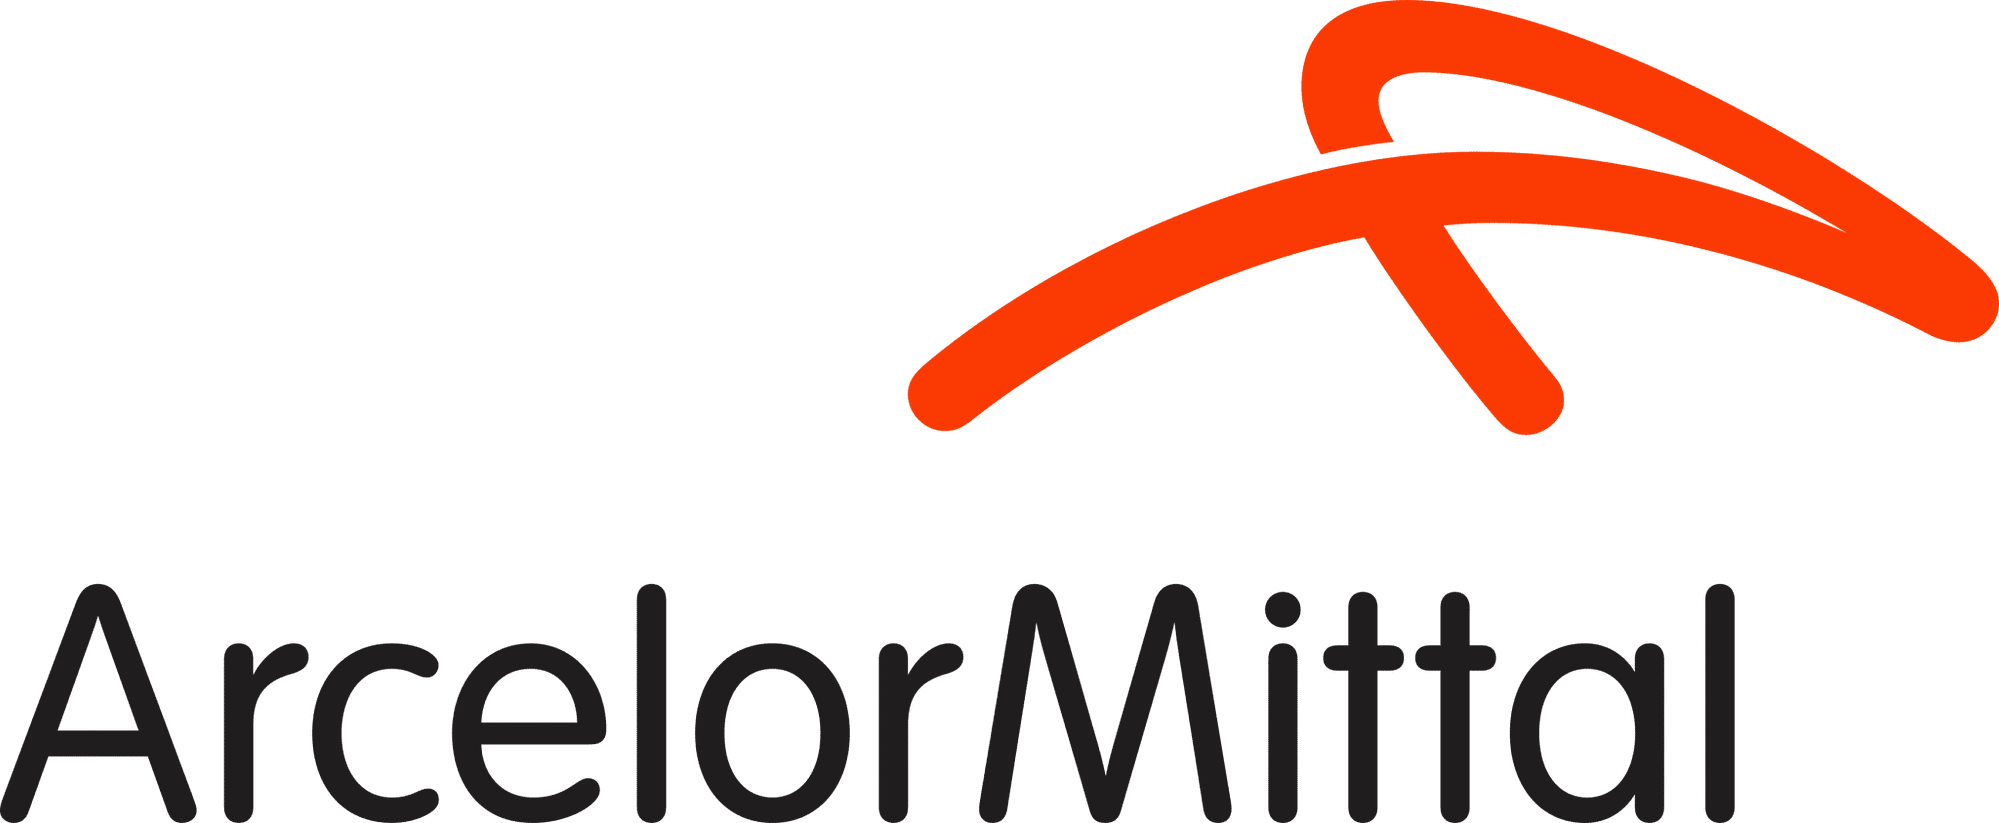 arcelormittal-logo